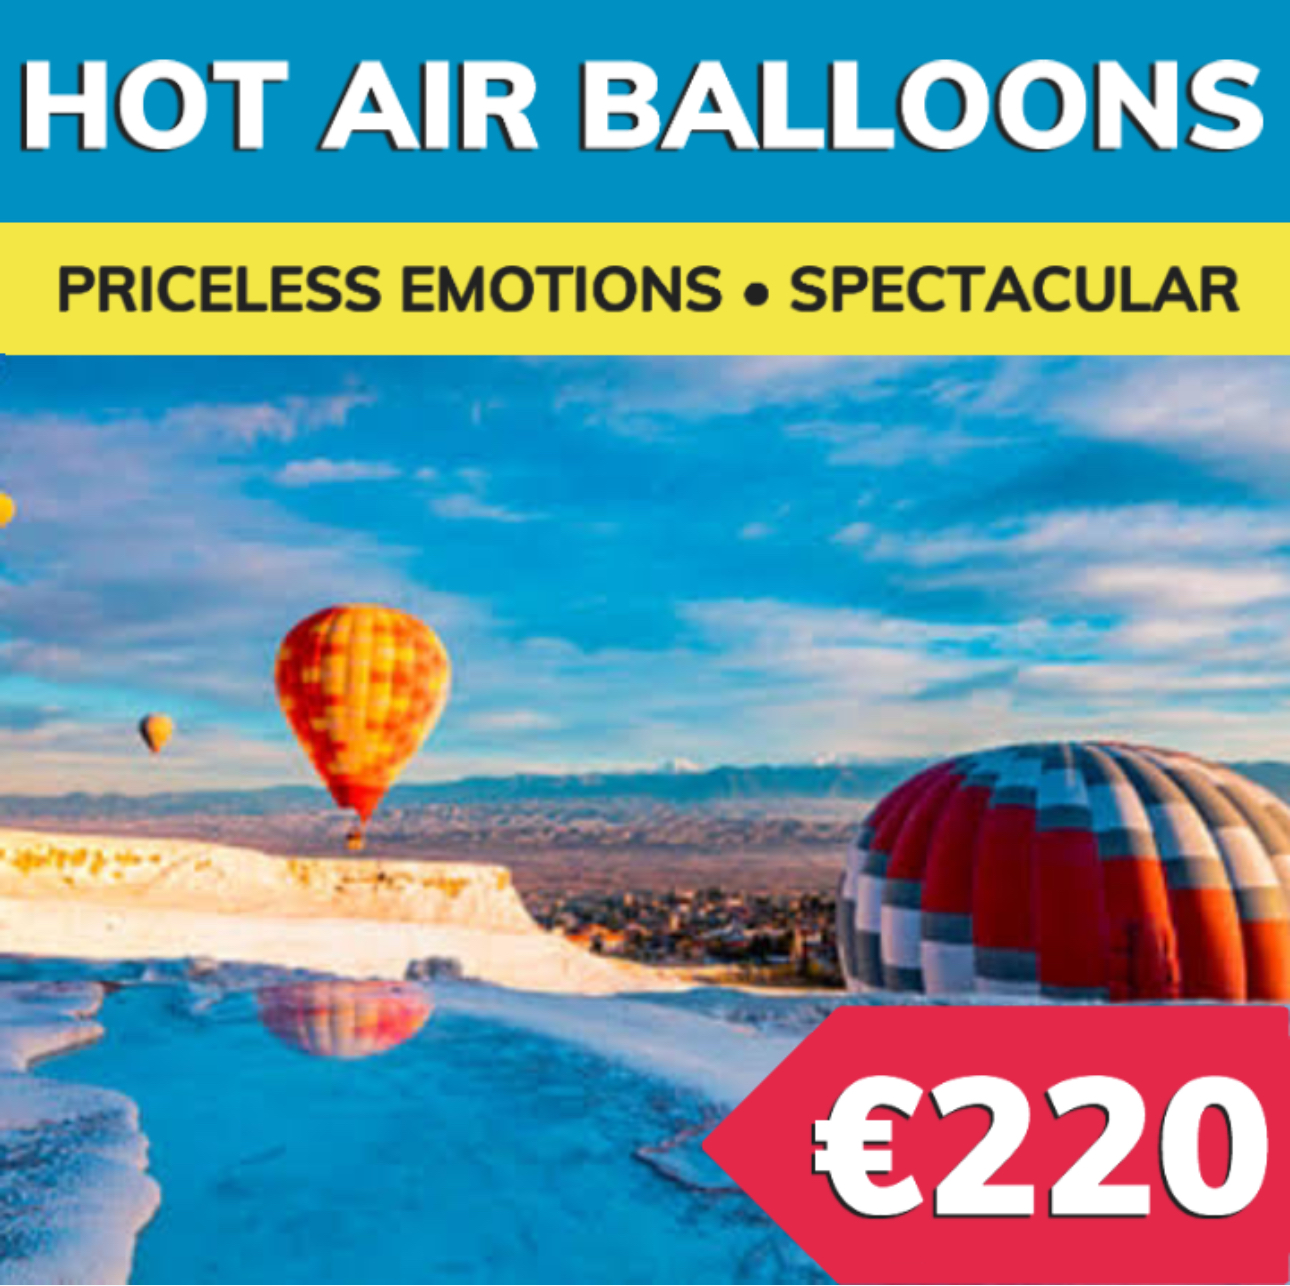 Hot Air Balloons Tour in Pamukkale